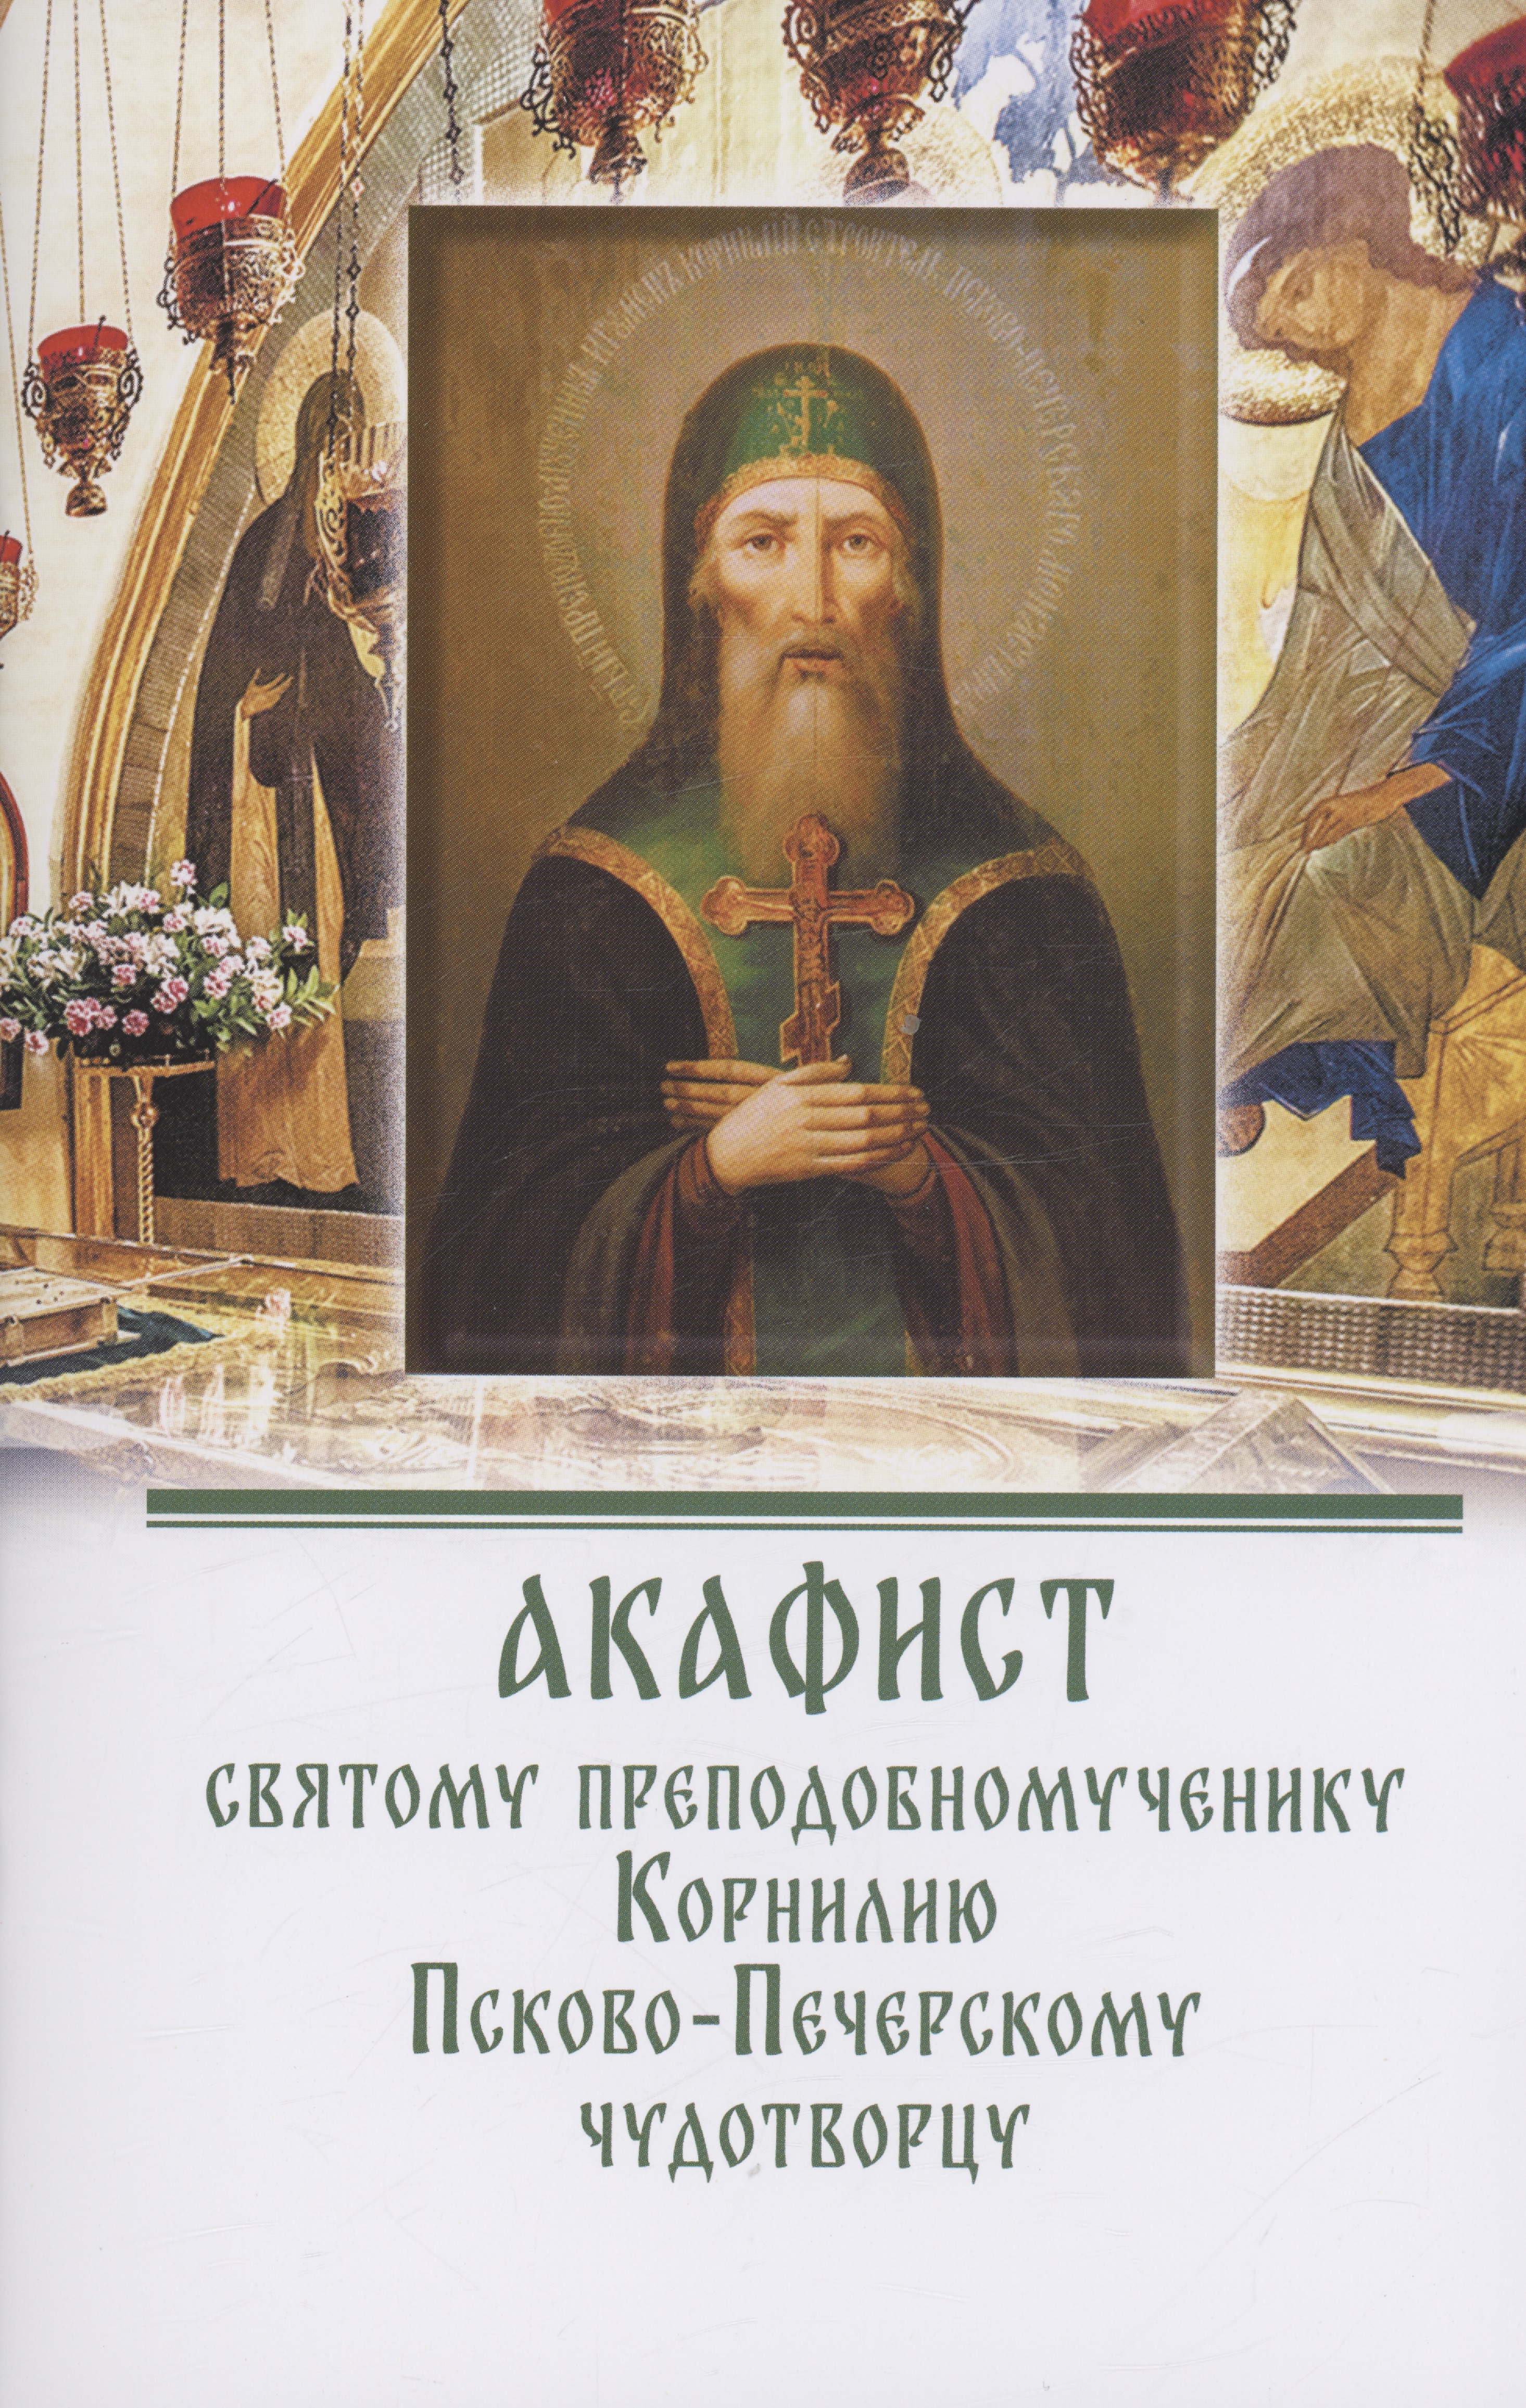 Акафист святому преподобномученику Корнилию Псково-Печерскому чудотворцу